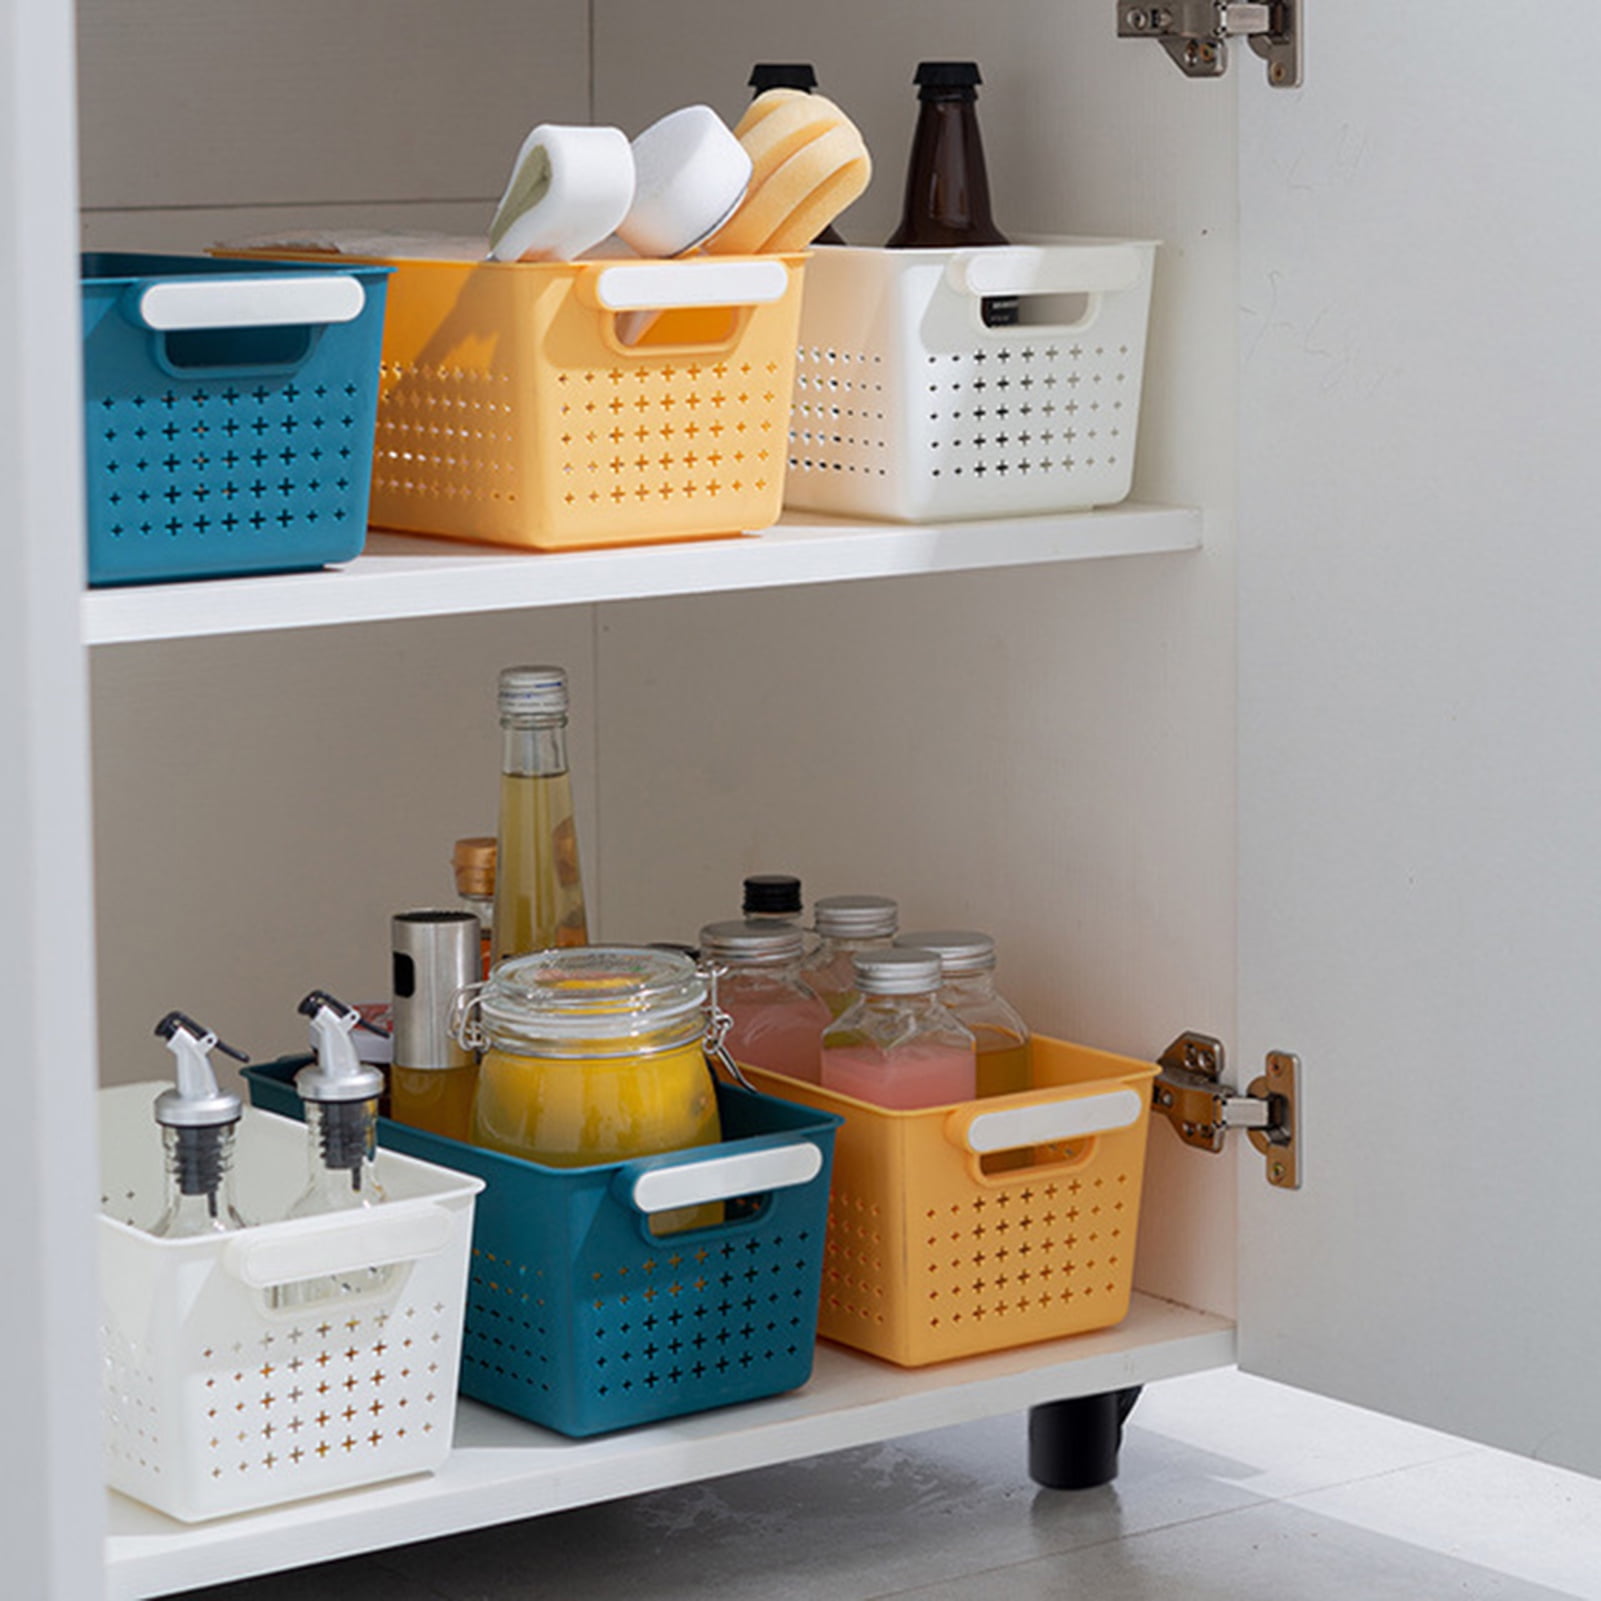 MBKO Plastic Storage Basket - Kitchen Office Pantry Organizer Bins (Small-6PK, Grey)